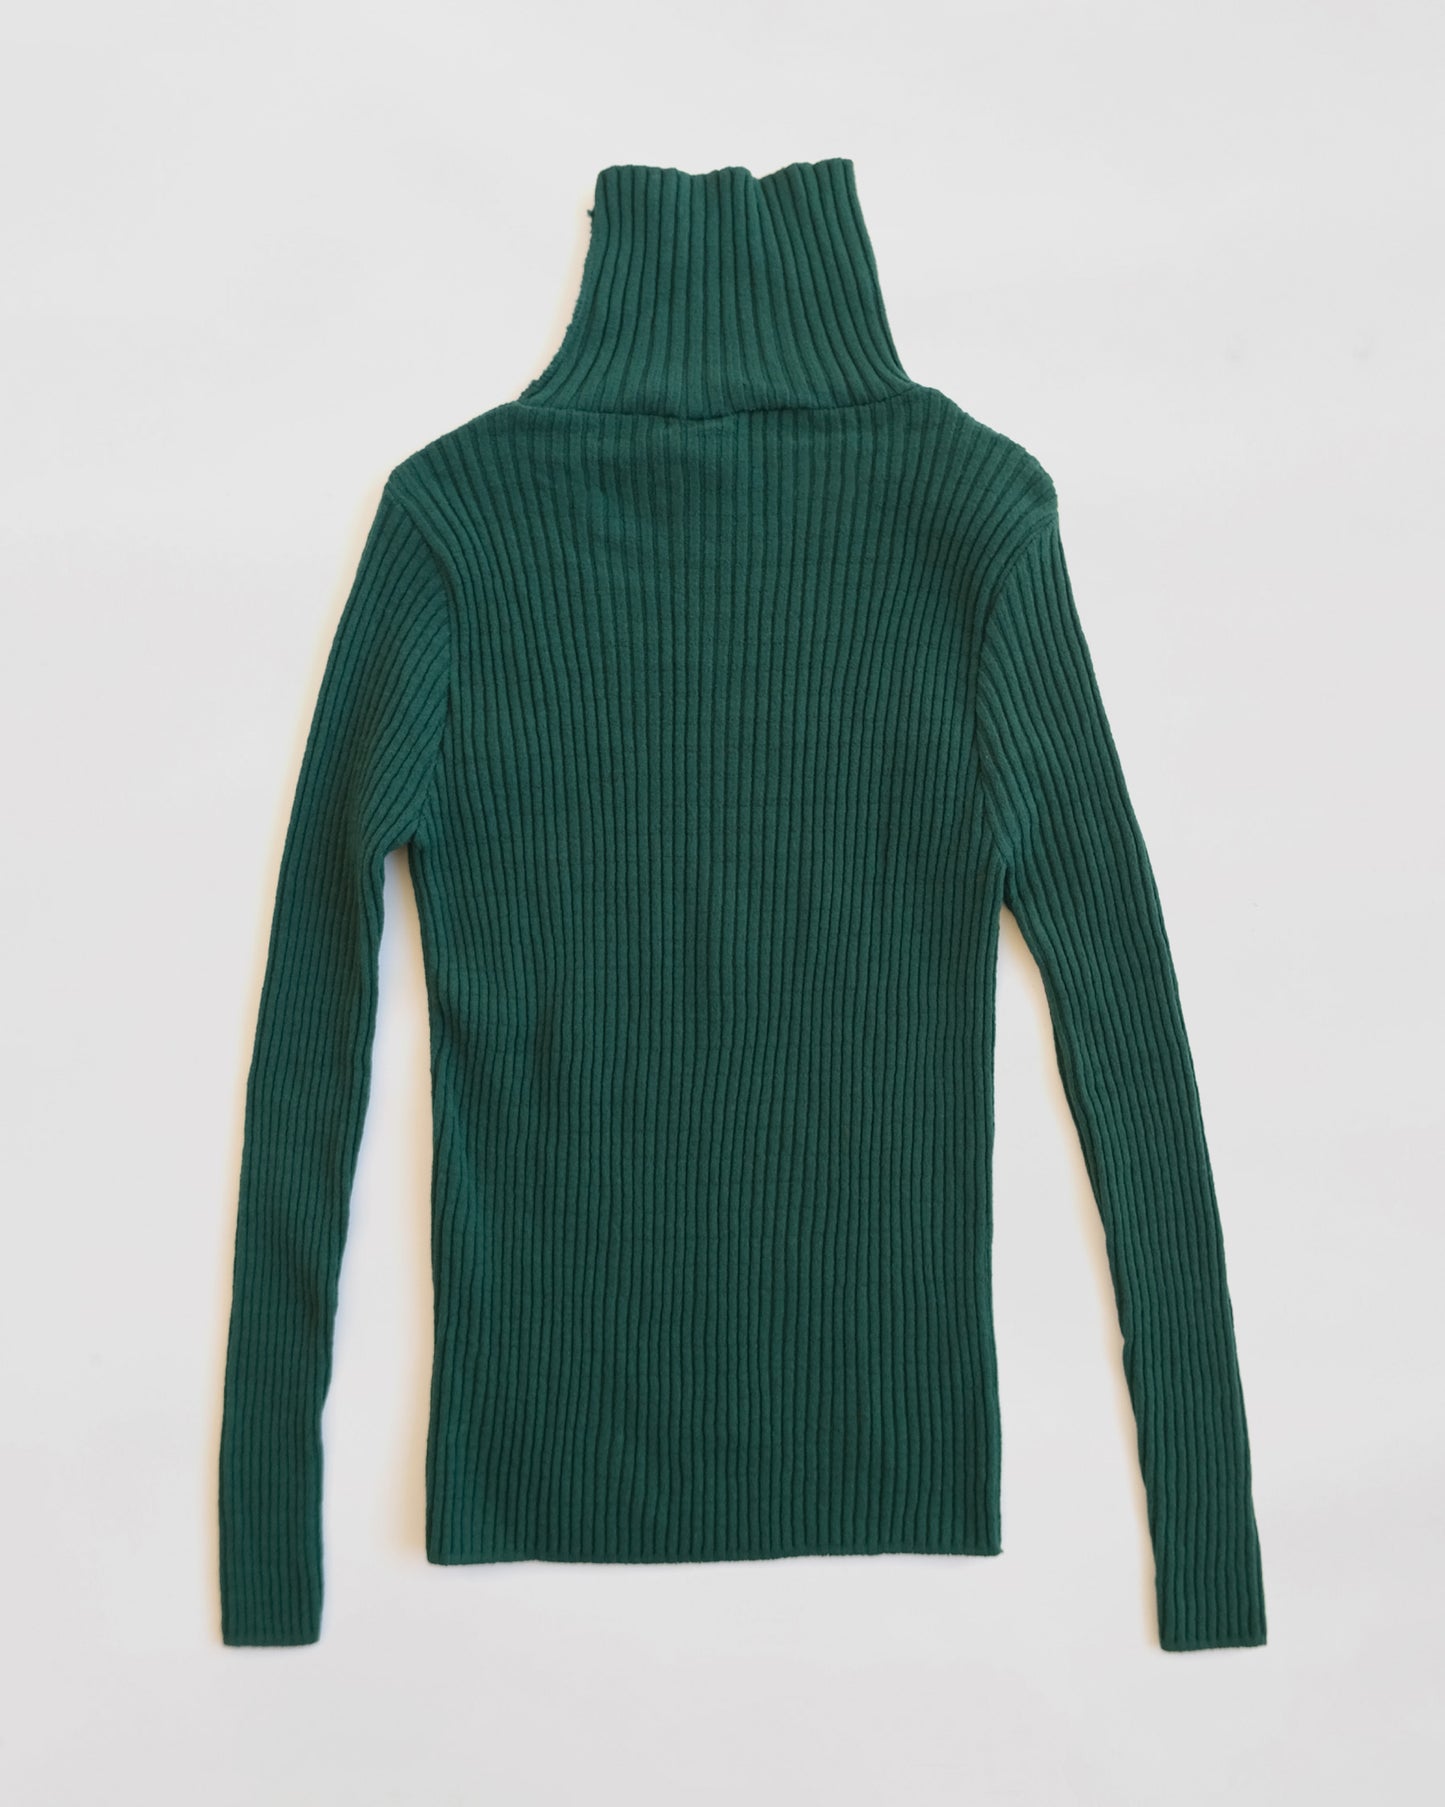 NOS Turtleneck Sweater